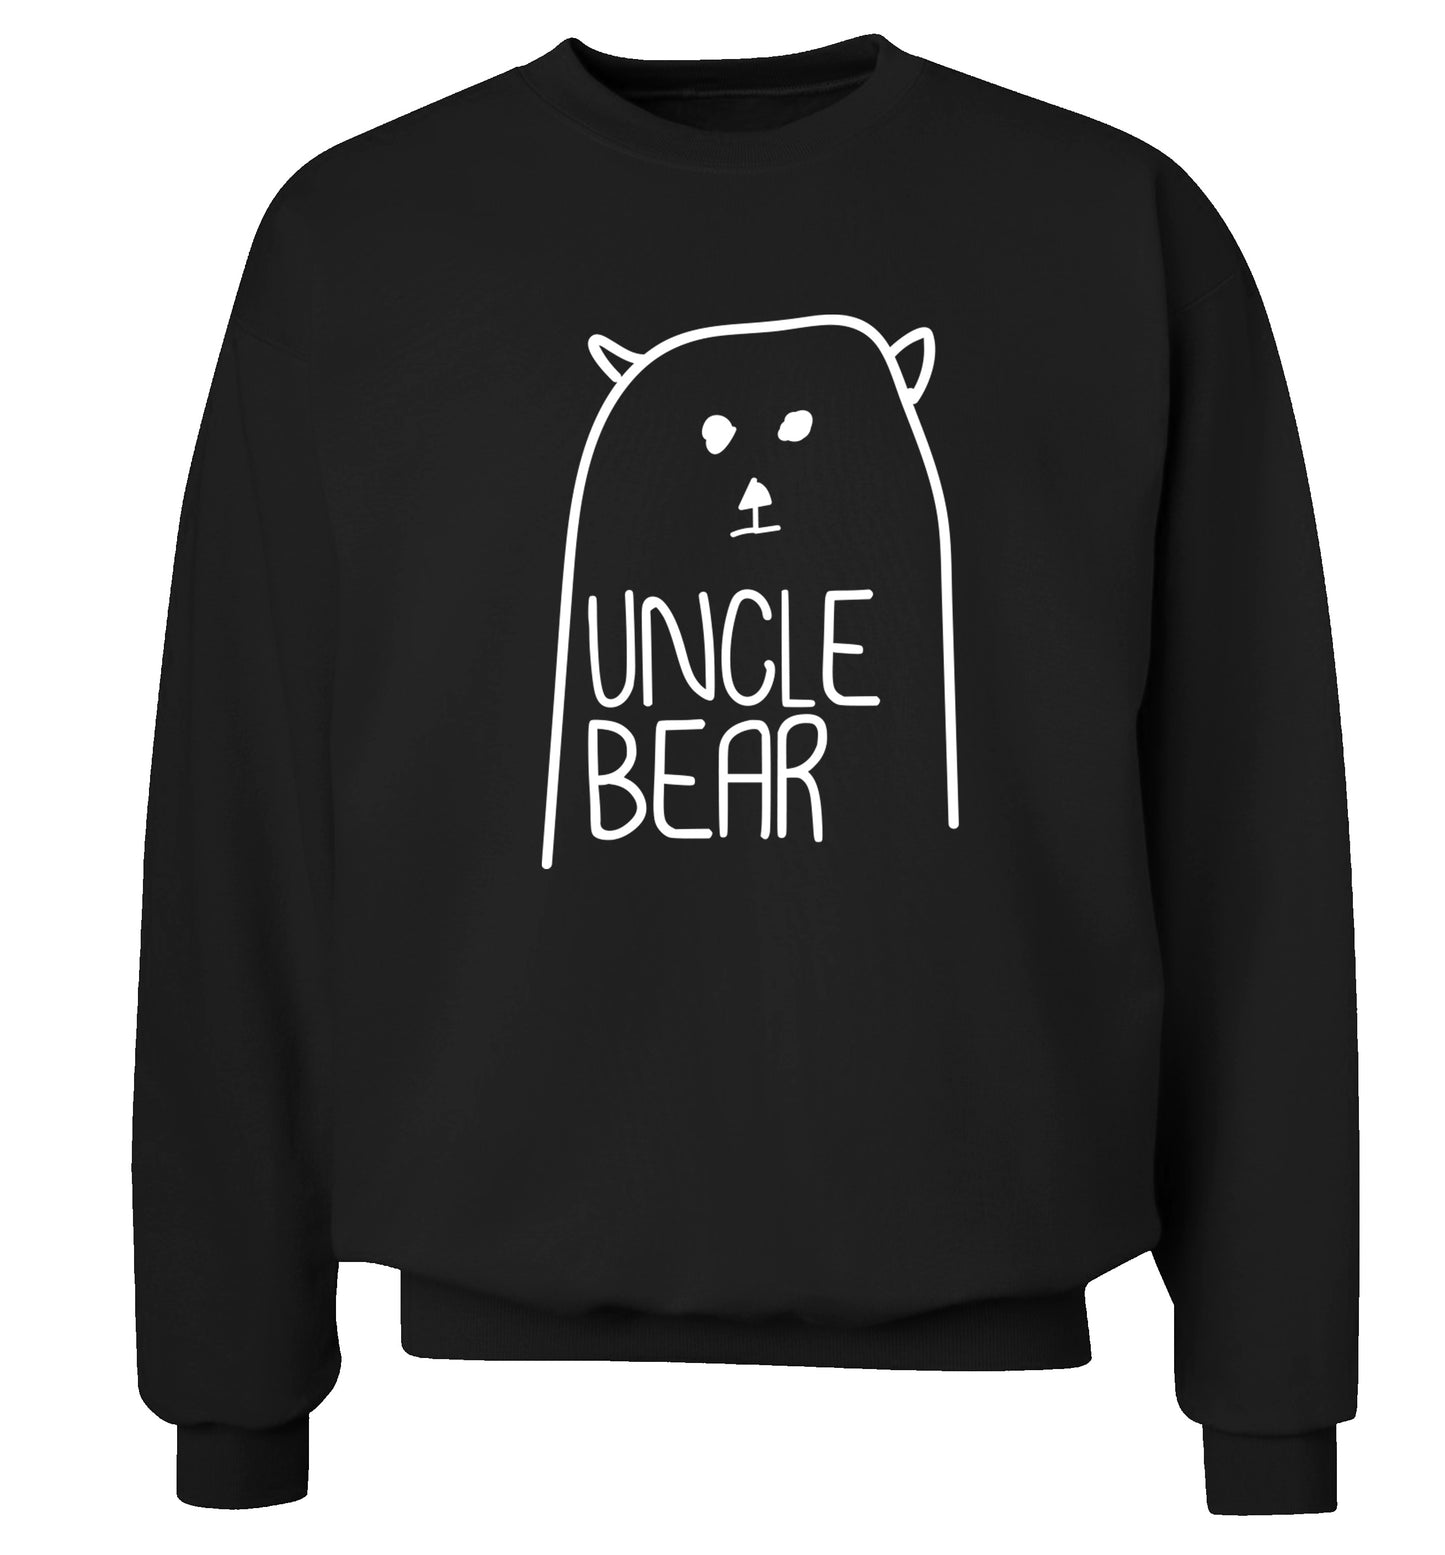 Uncle bear Adult's unisex black Sweater 2XL